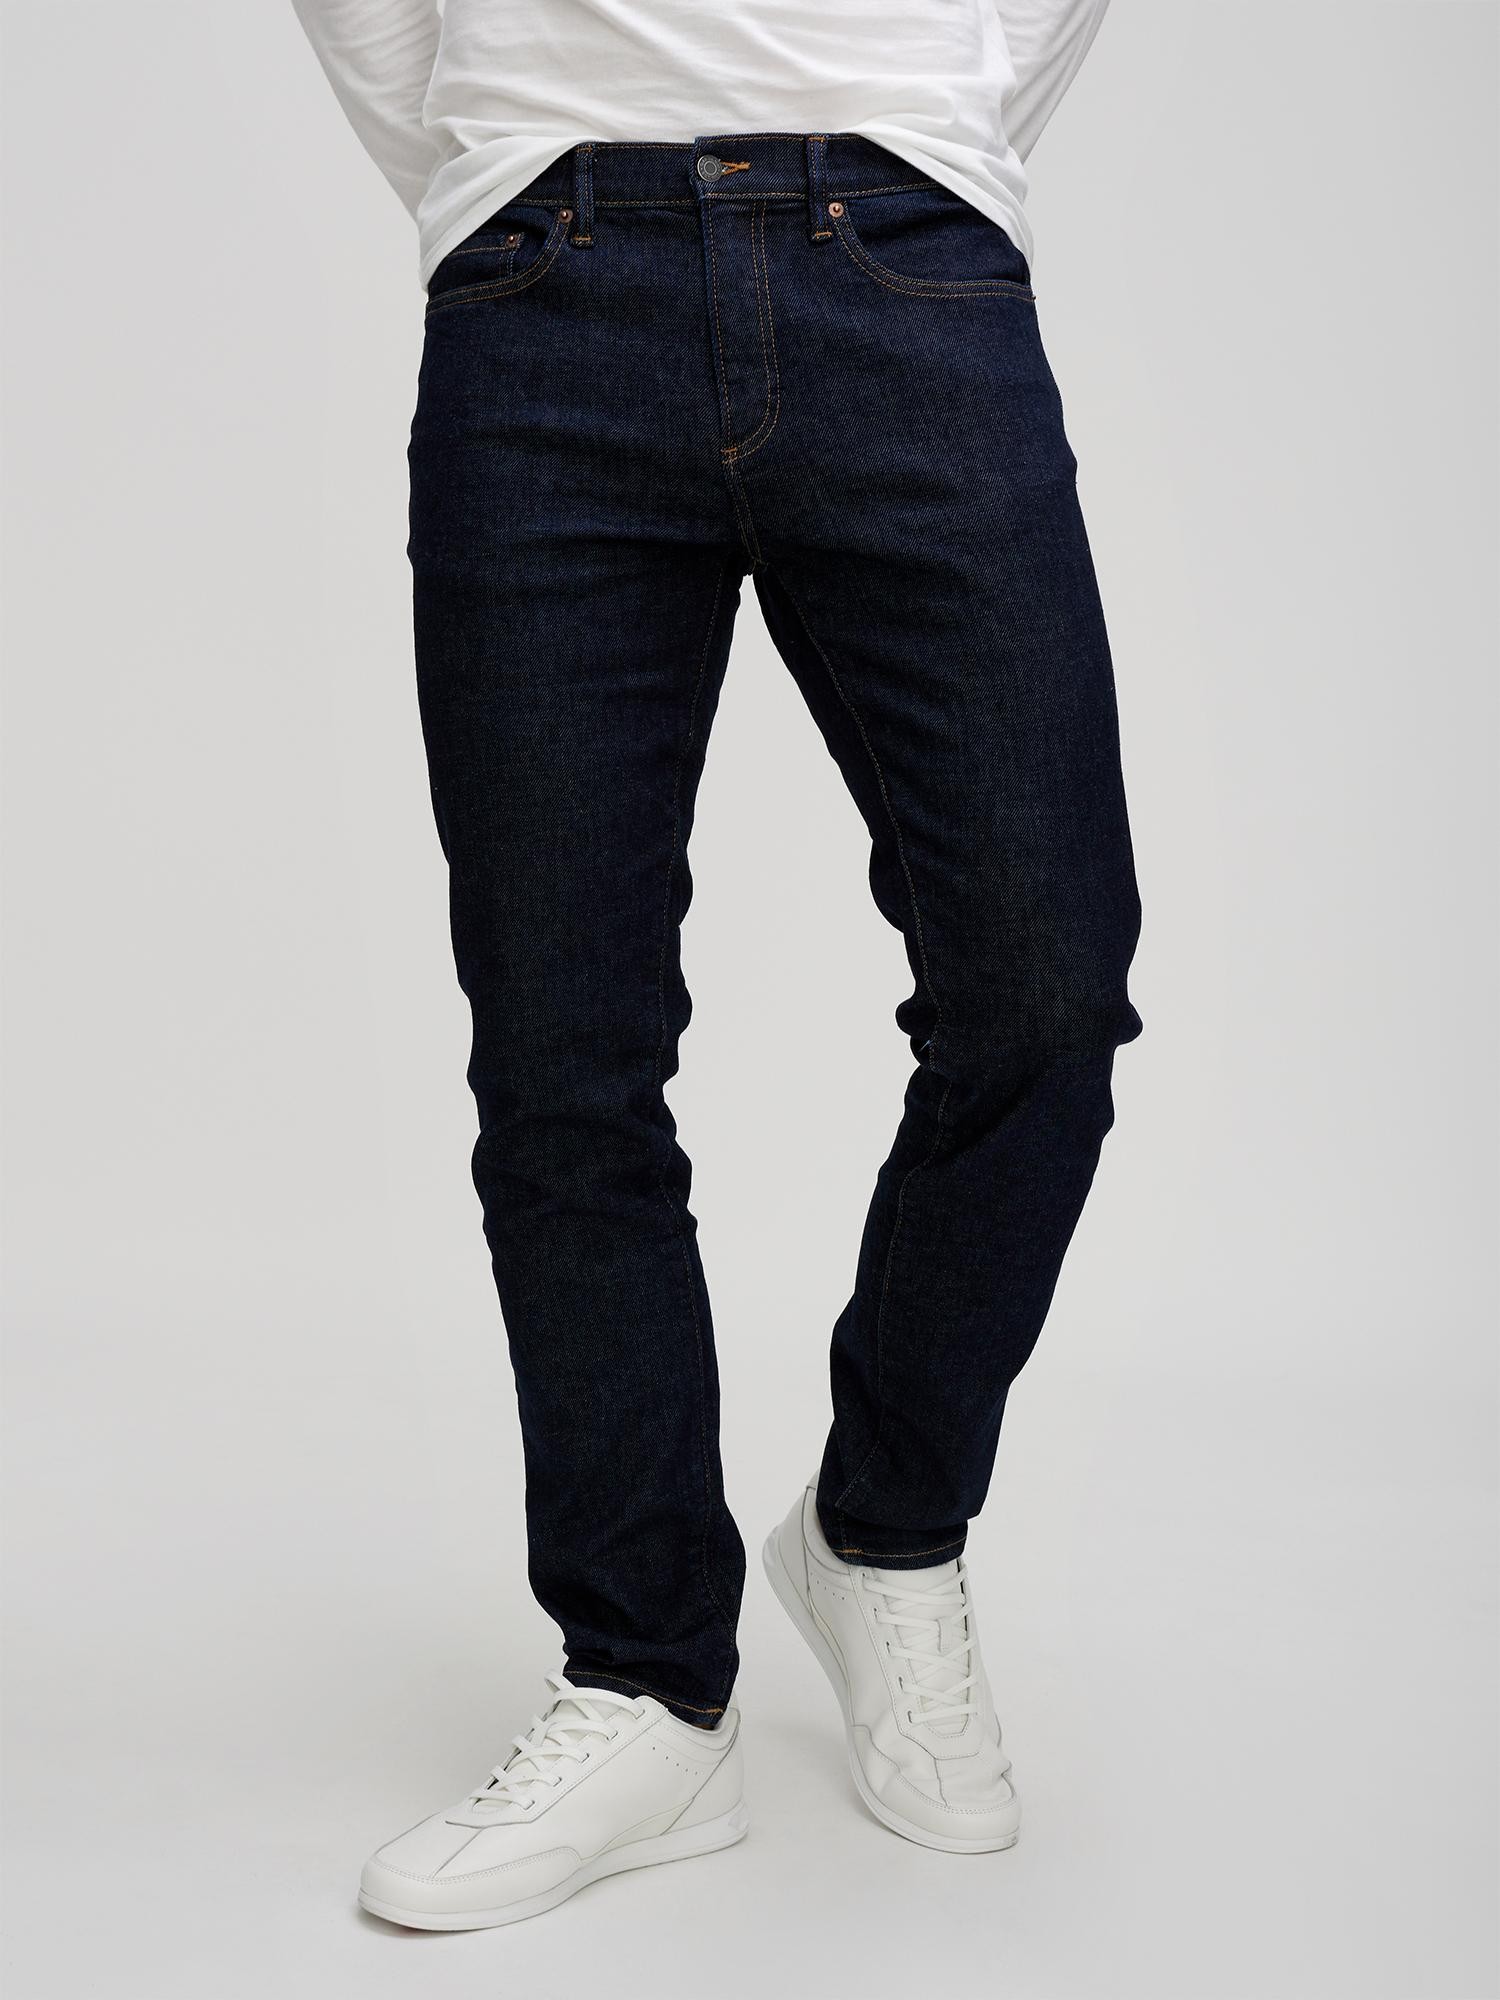 Gap Soft Wear Slim Jeans With Washwell3 - ShopStyle